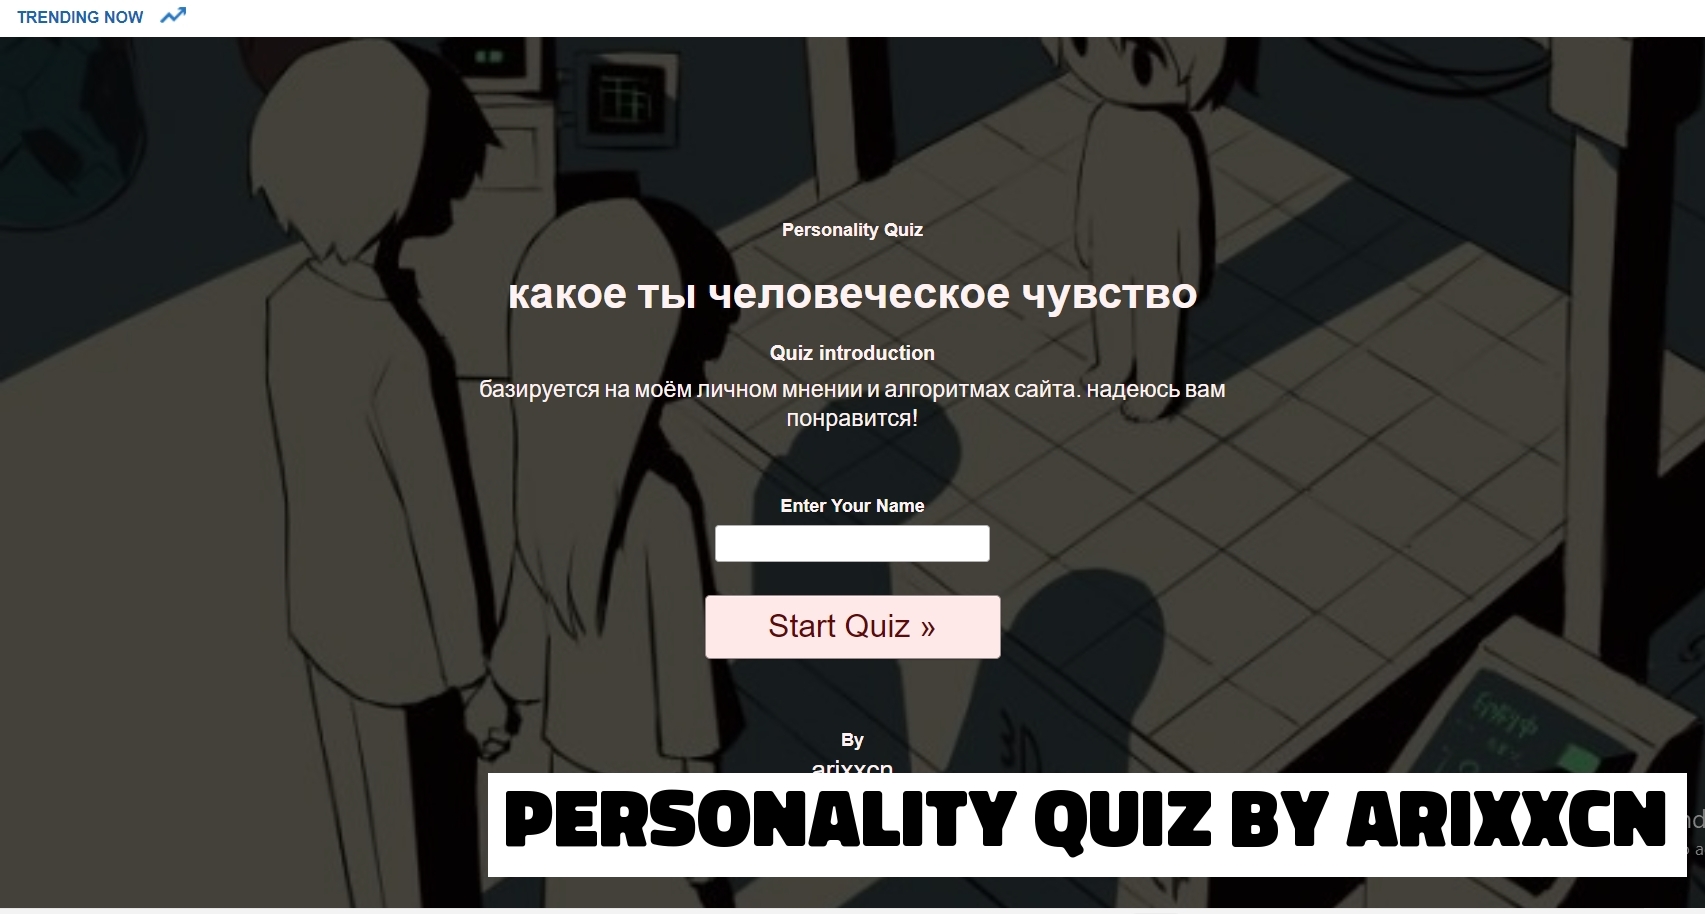 Personality Quiz by Arixxcn